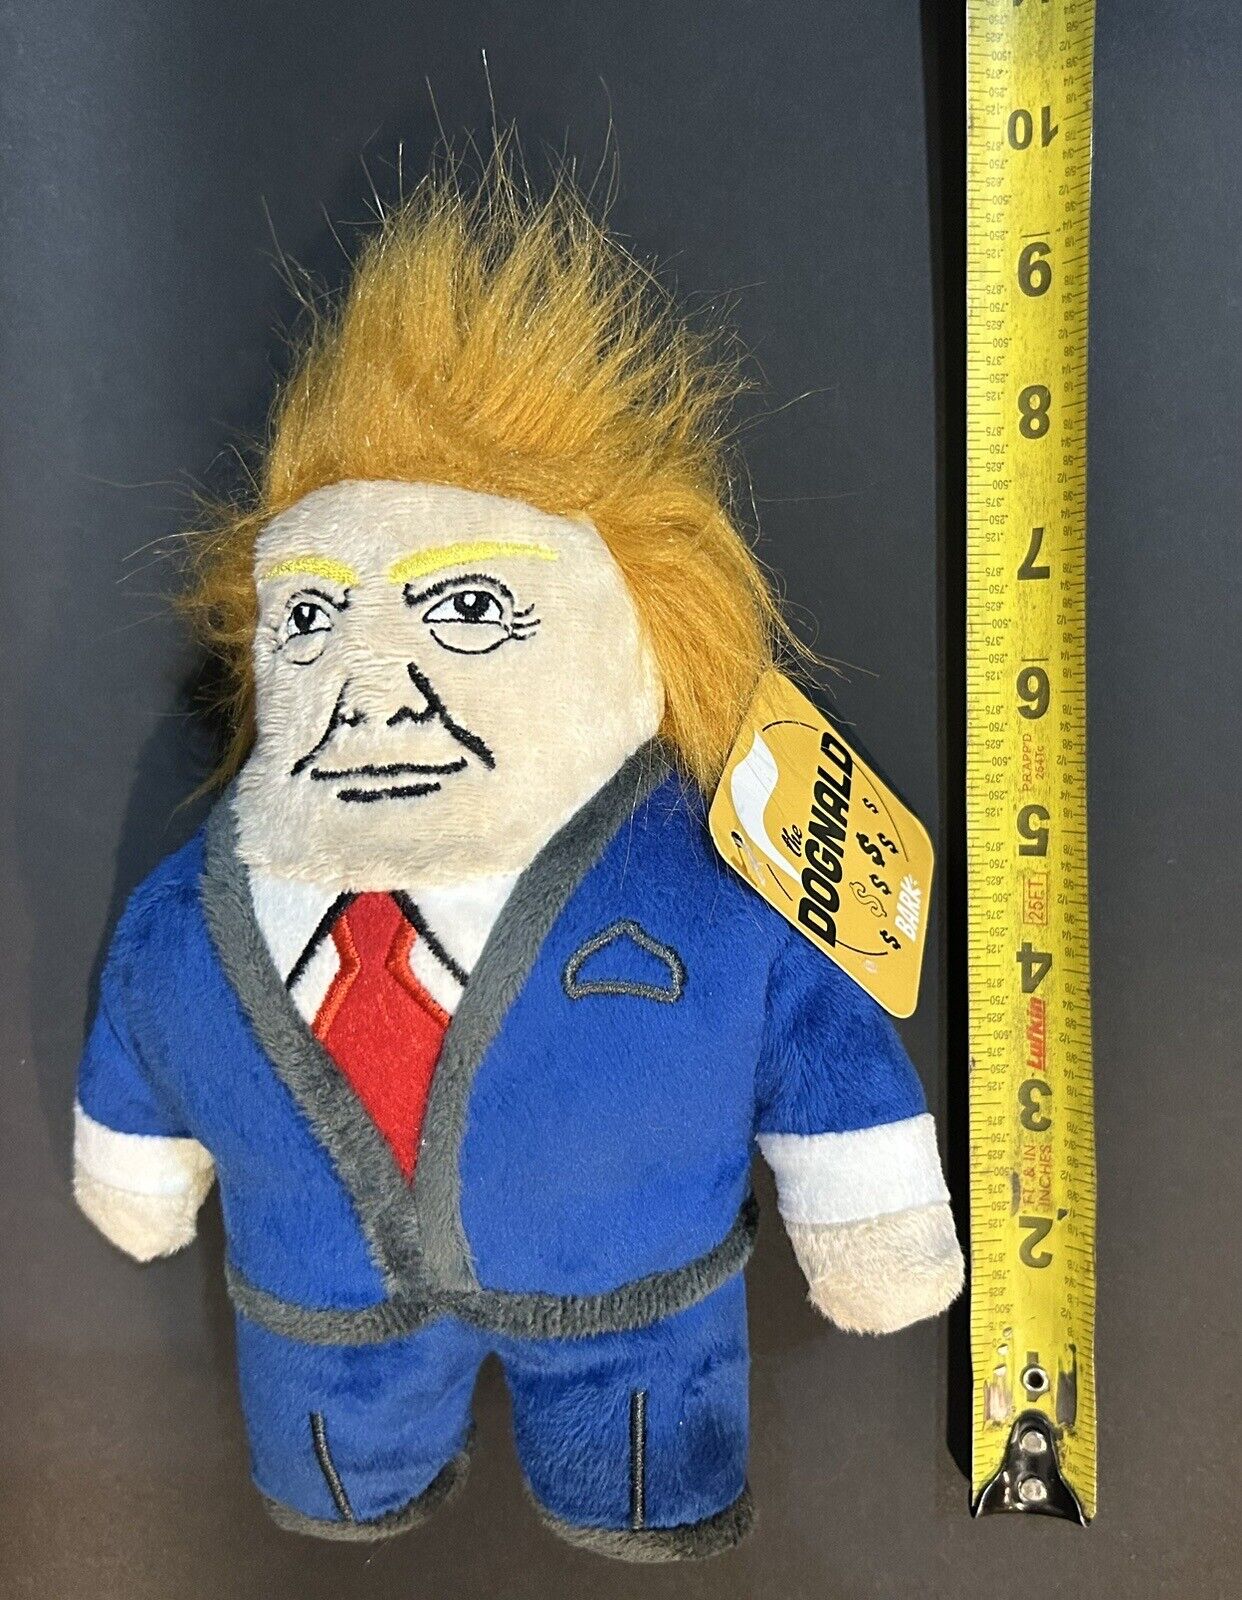 Dognald Donald Trump Dog Toy